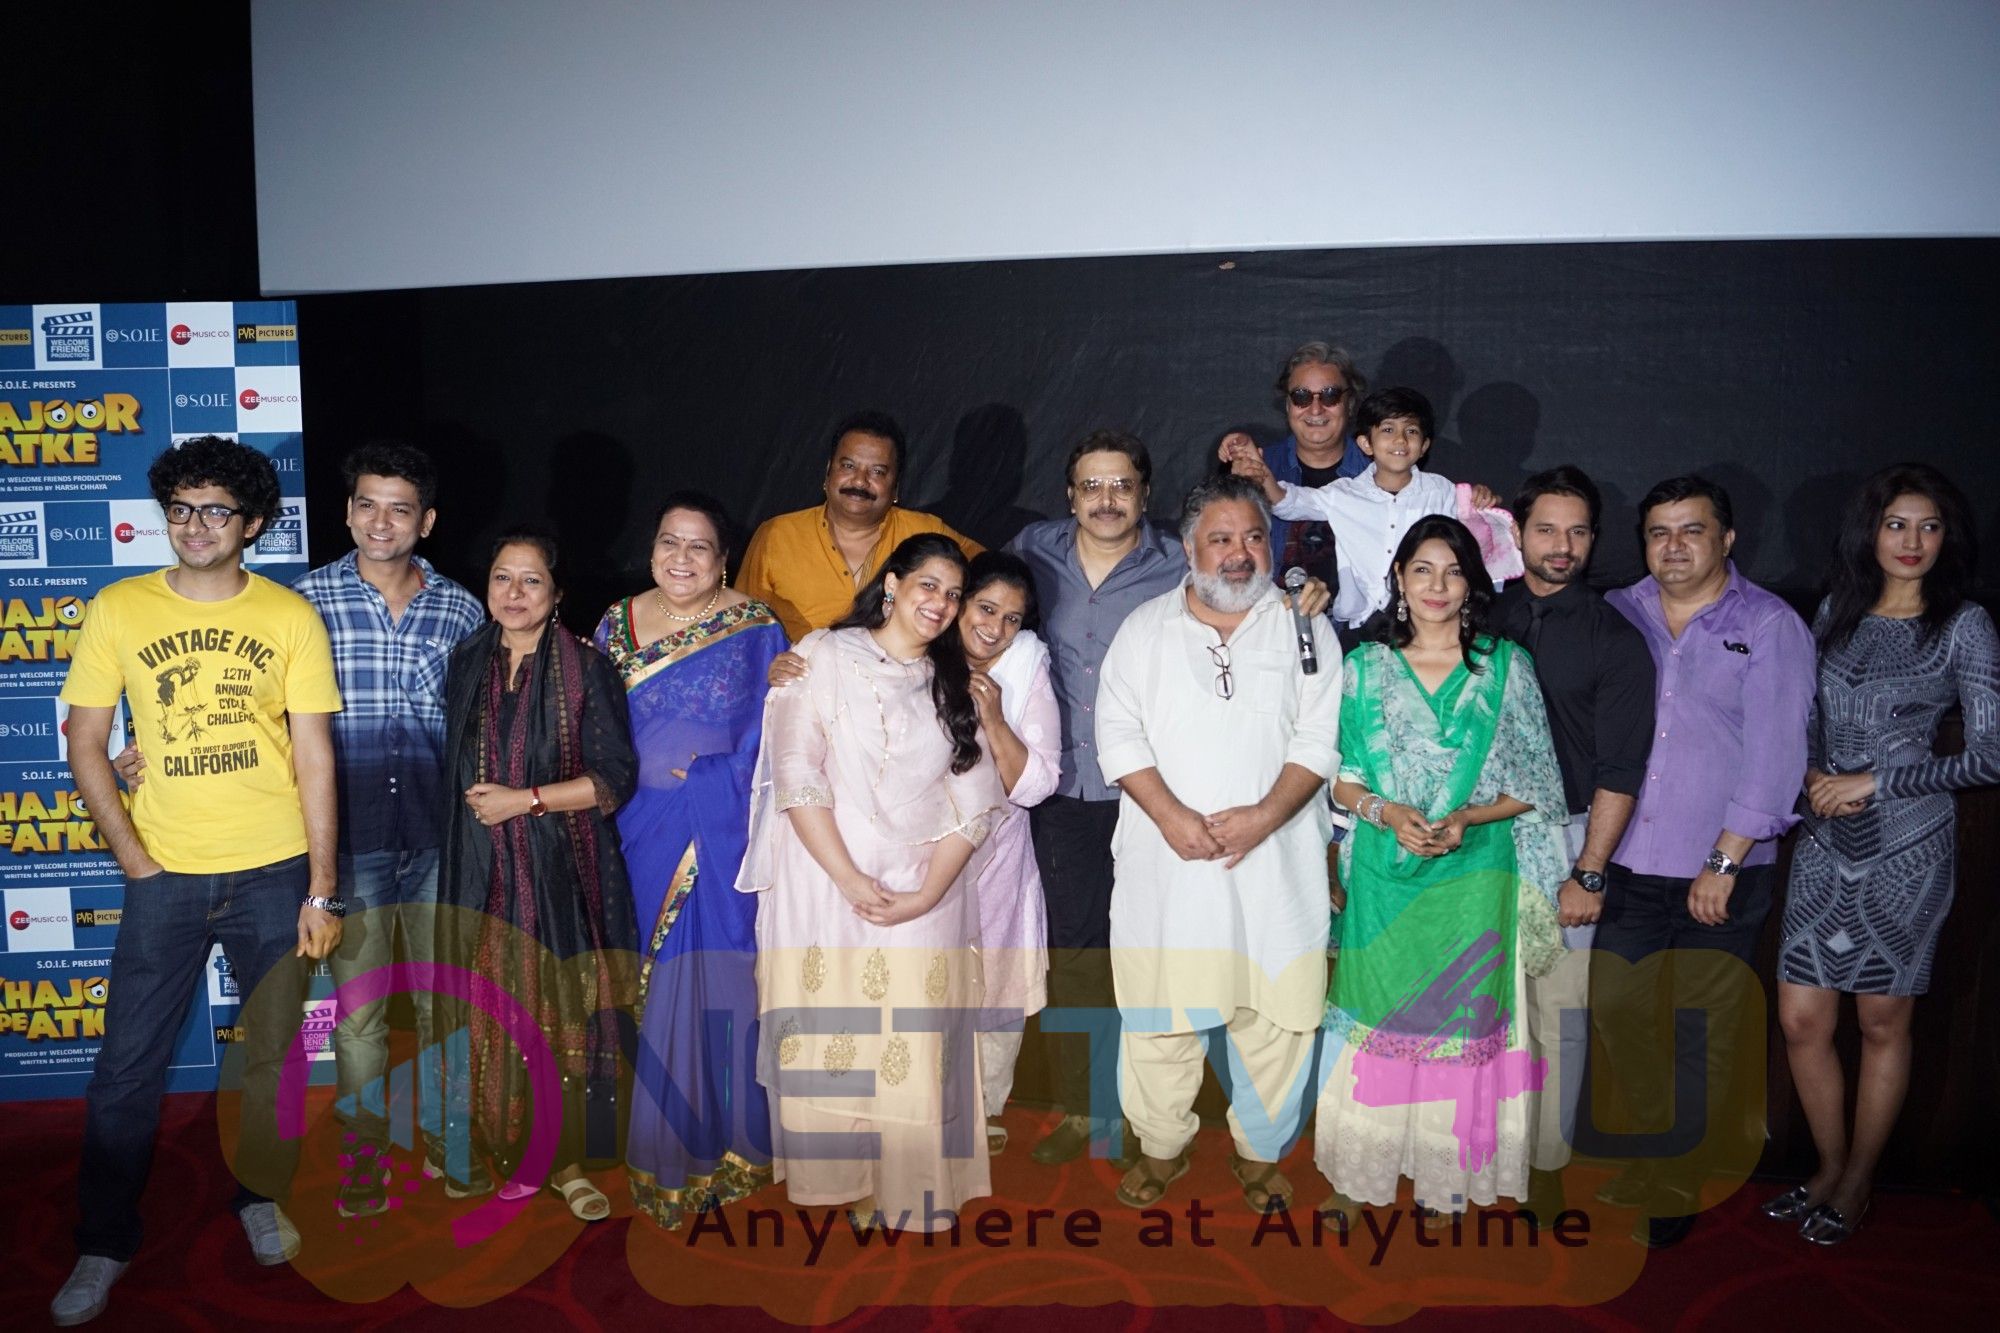  Khajoor Me Atke Movie Trailer Launch Hindi Gallery